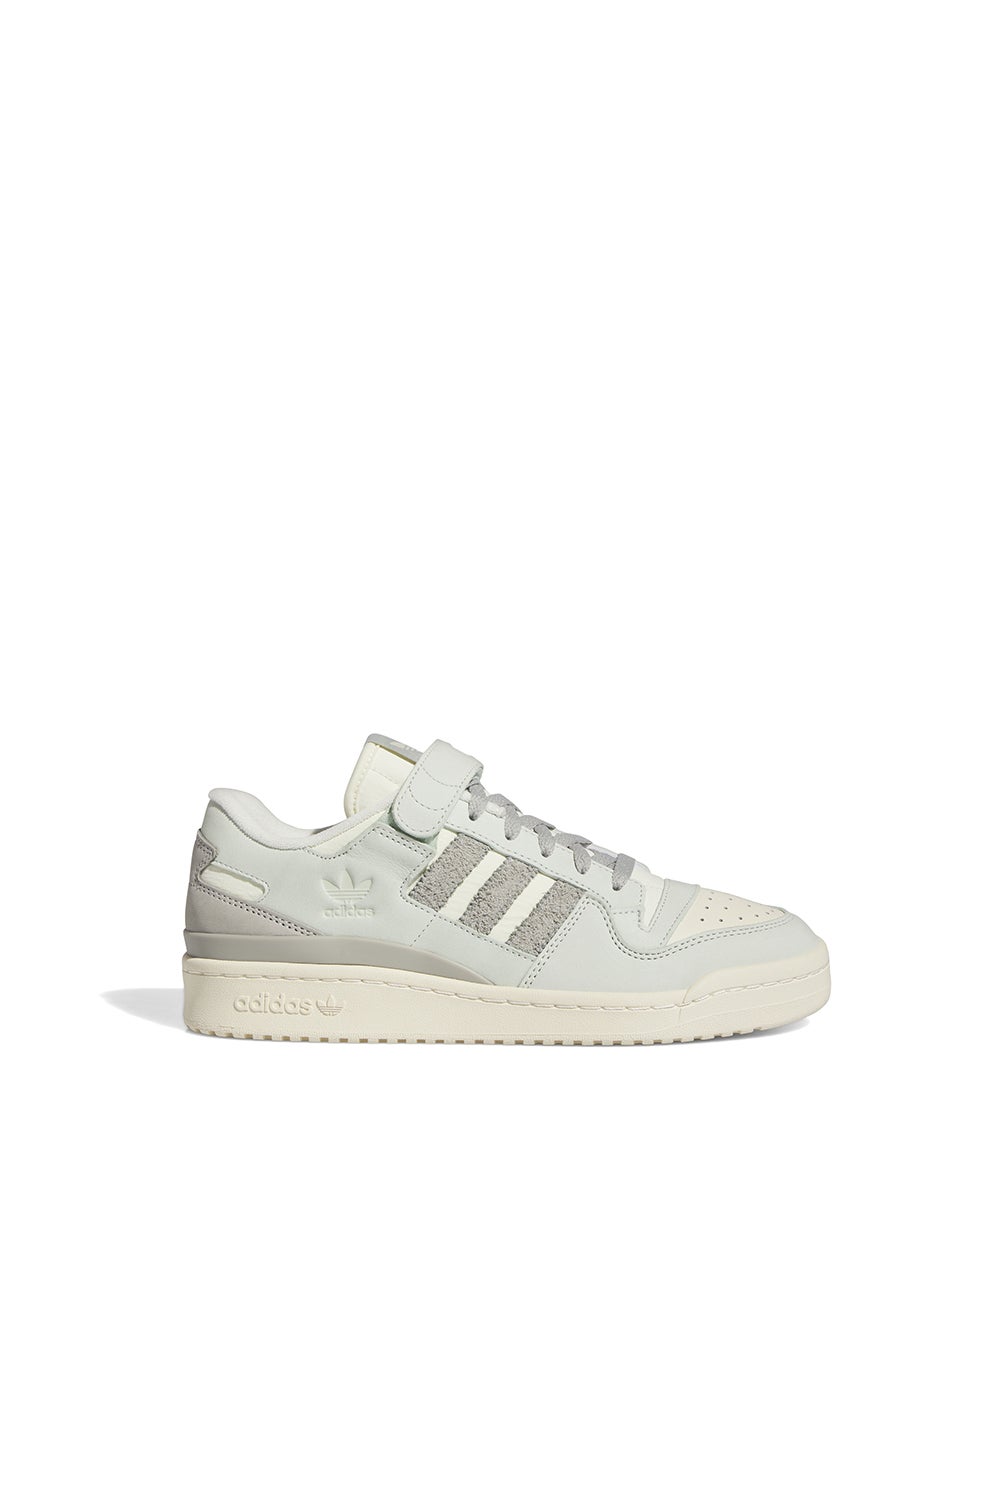 Adidas Forum 84 Low Arwa Al Banawi Crystal White Footwear White G58260 -  Sepsale